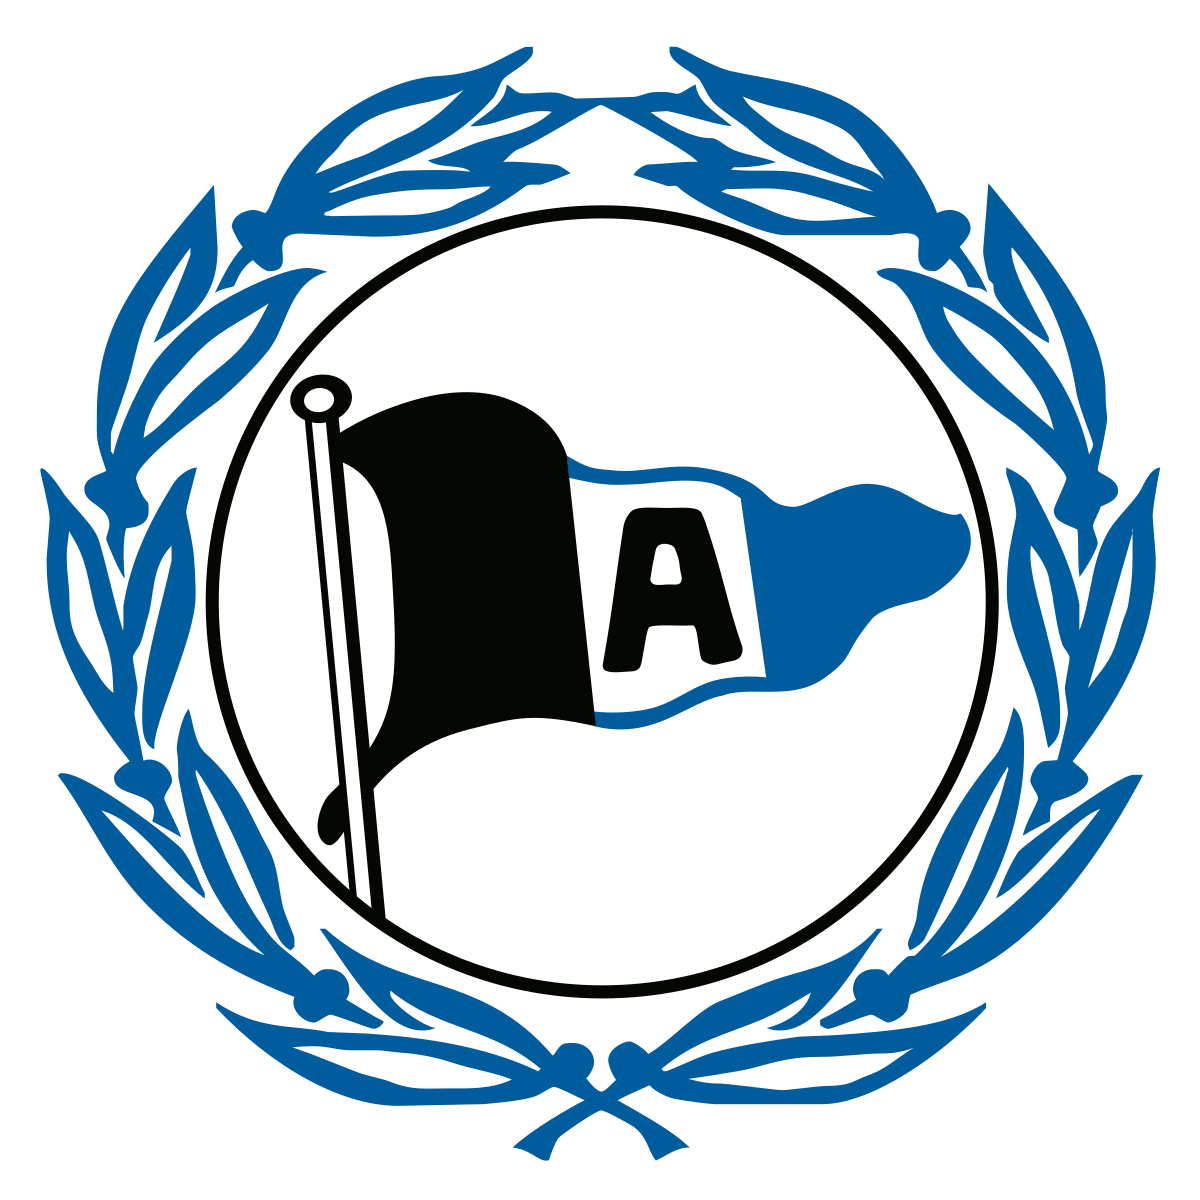 Arminia Bielefeld - Wikipedia